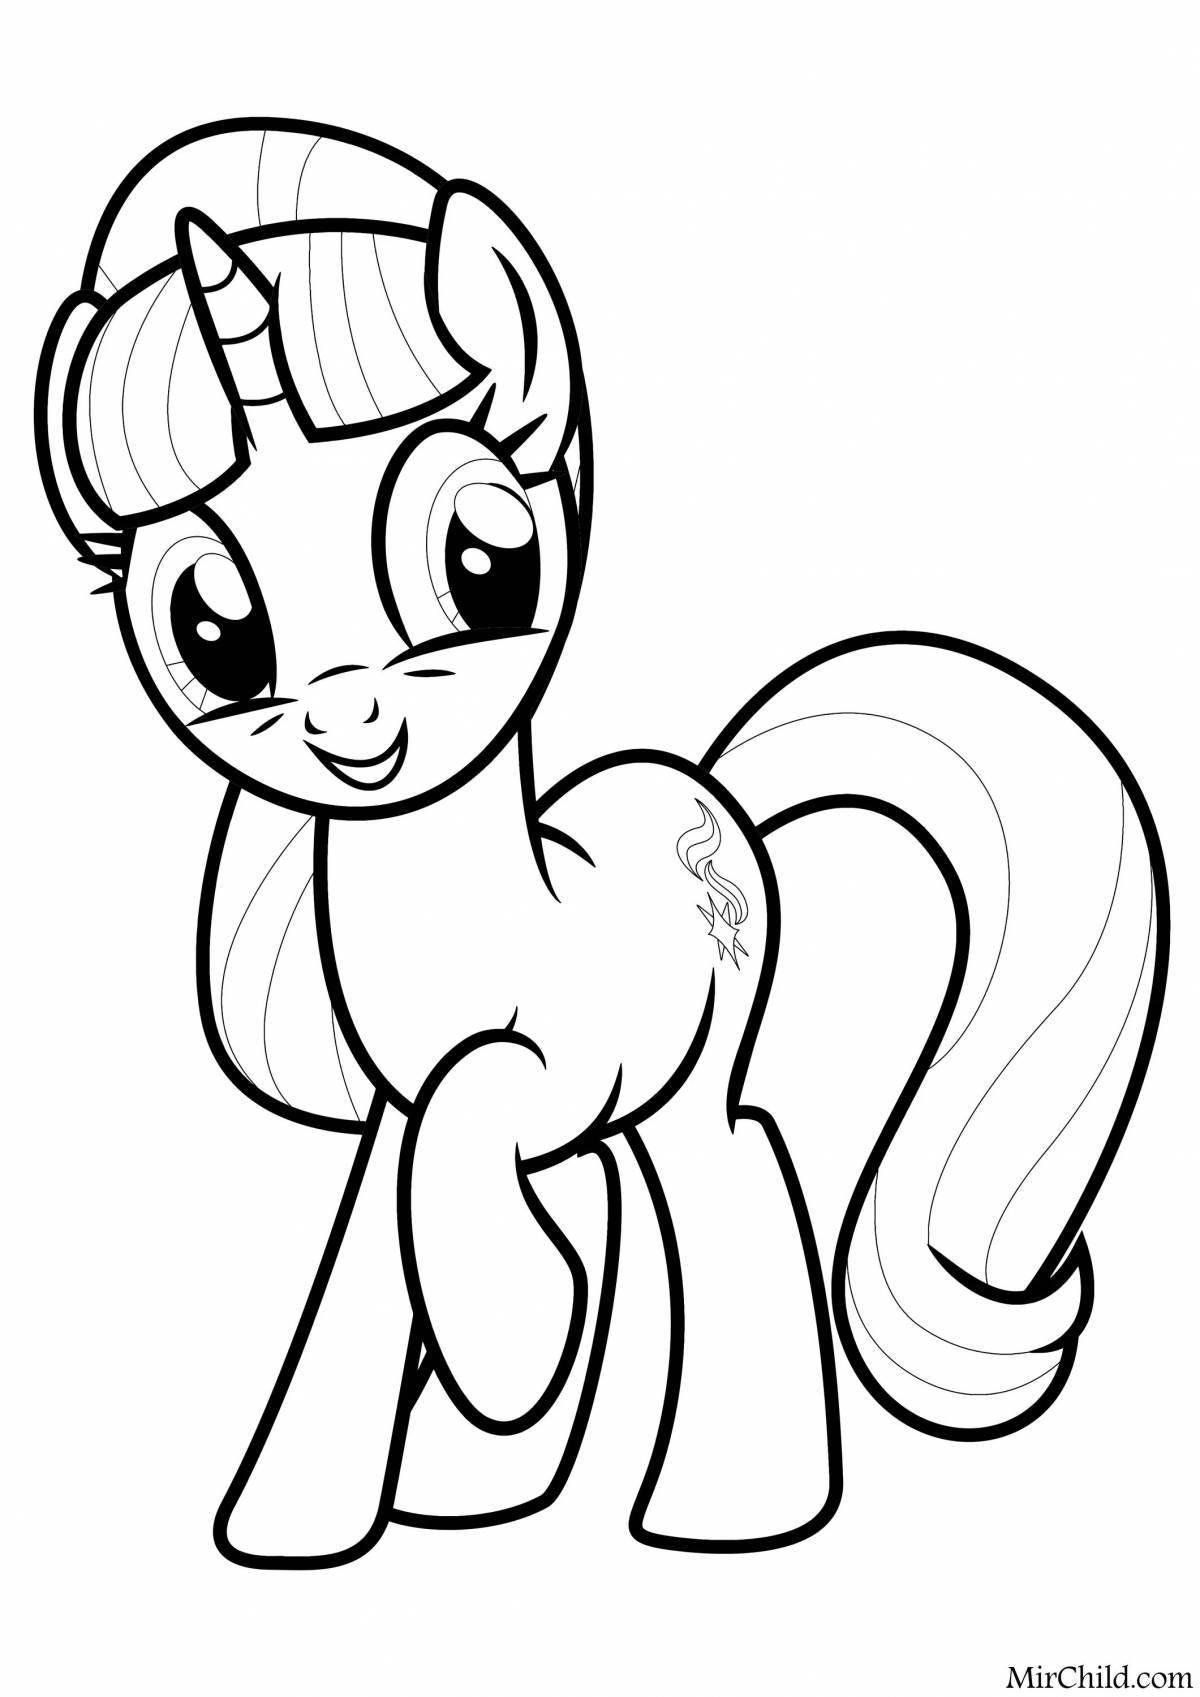 Splendorous pony turn on coloring page